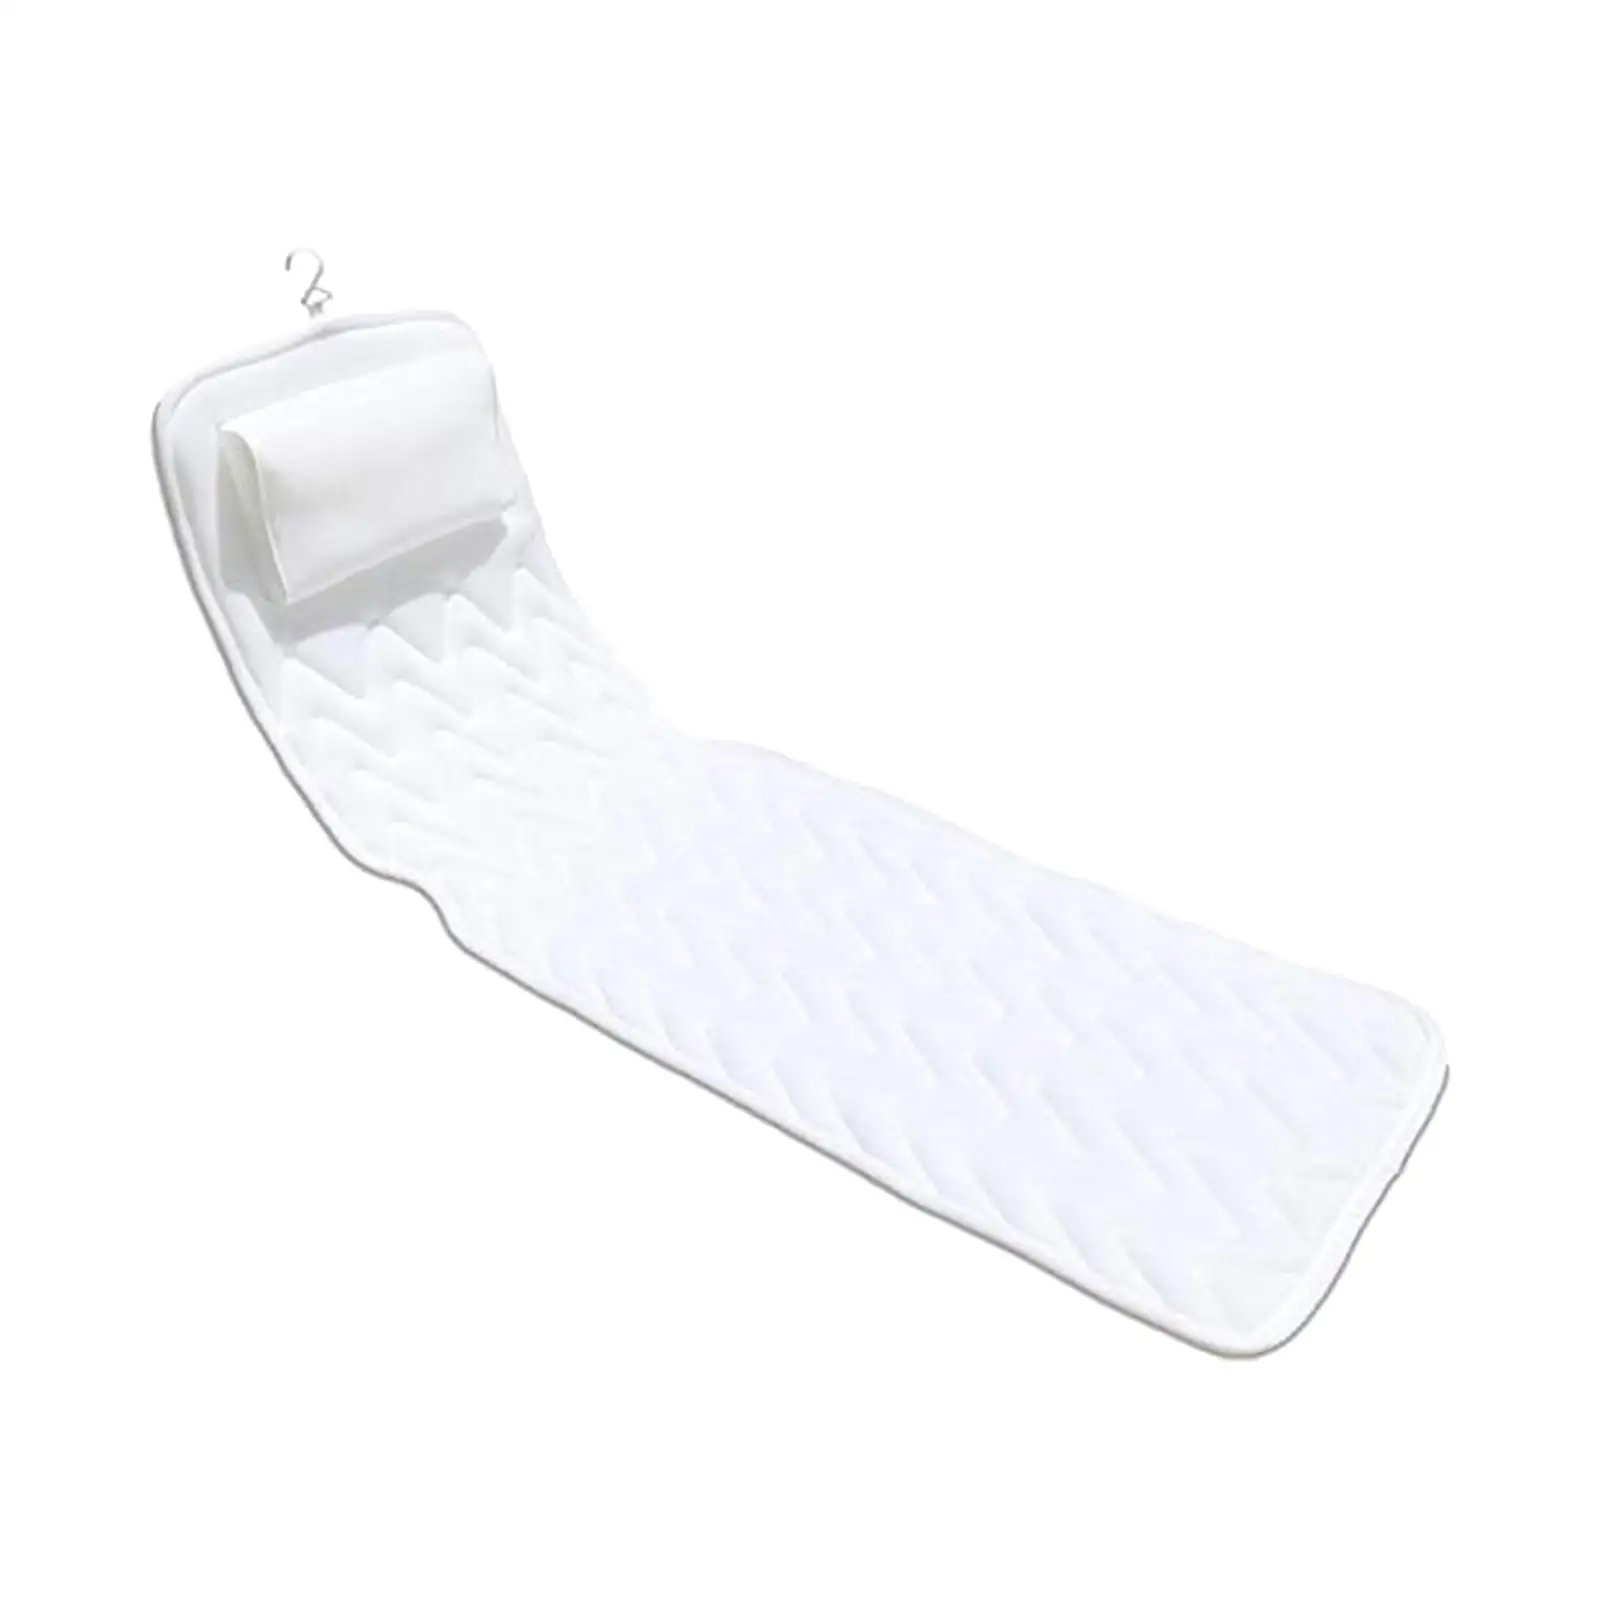 Full Body Bath Pillow Head Rest Mattress Pad Back Support for Bathtub SPA